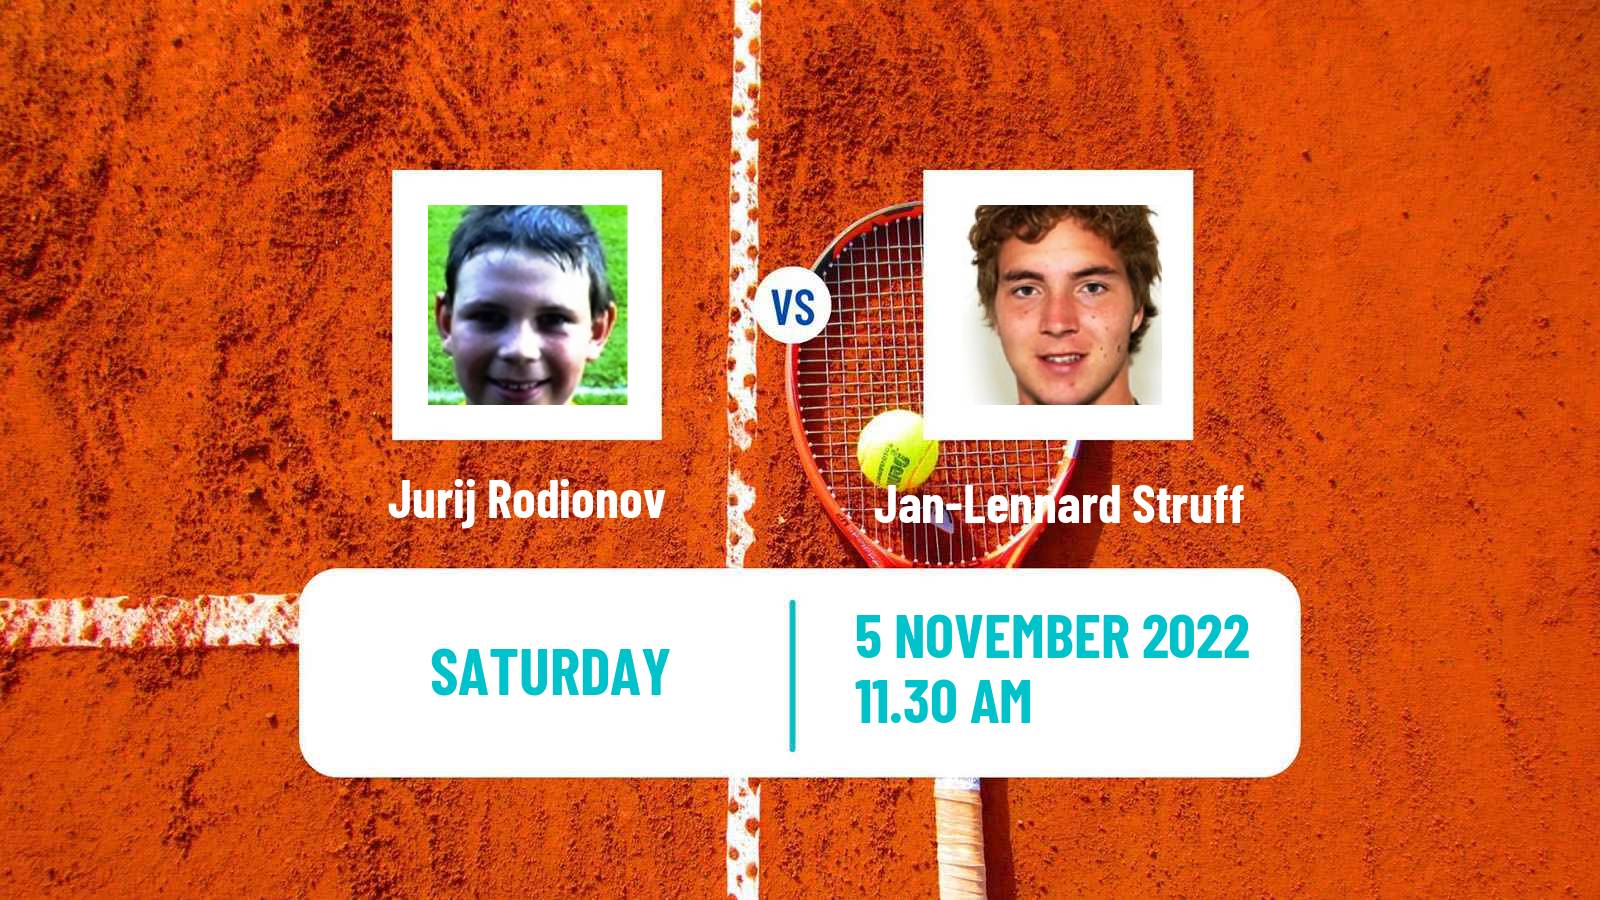 Tennis ATP Challenger Jurij Rodionov - Jan-Lennard Struff